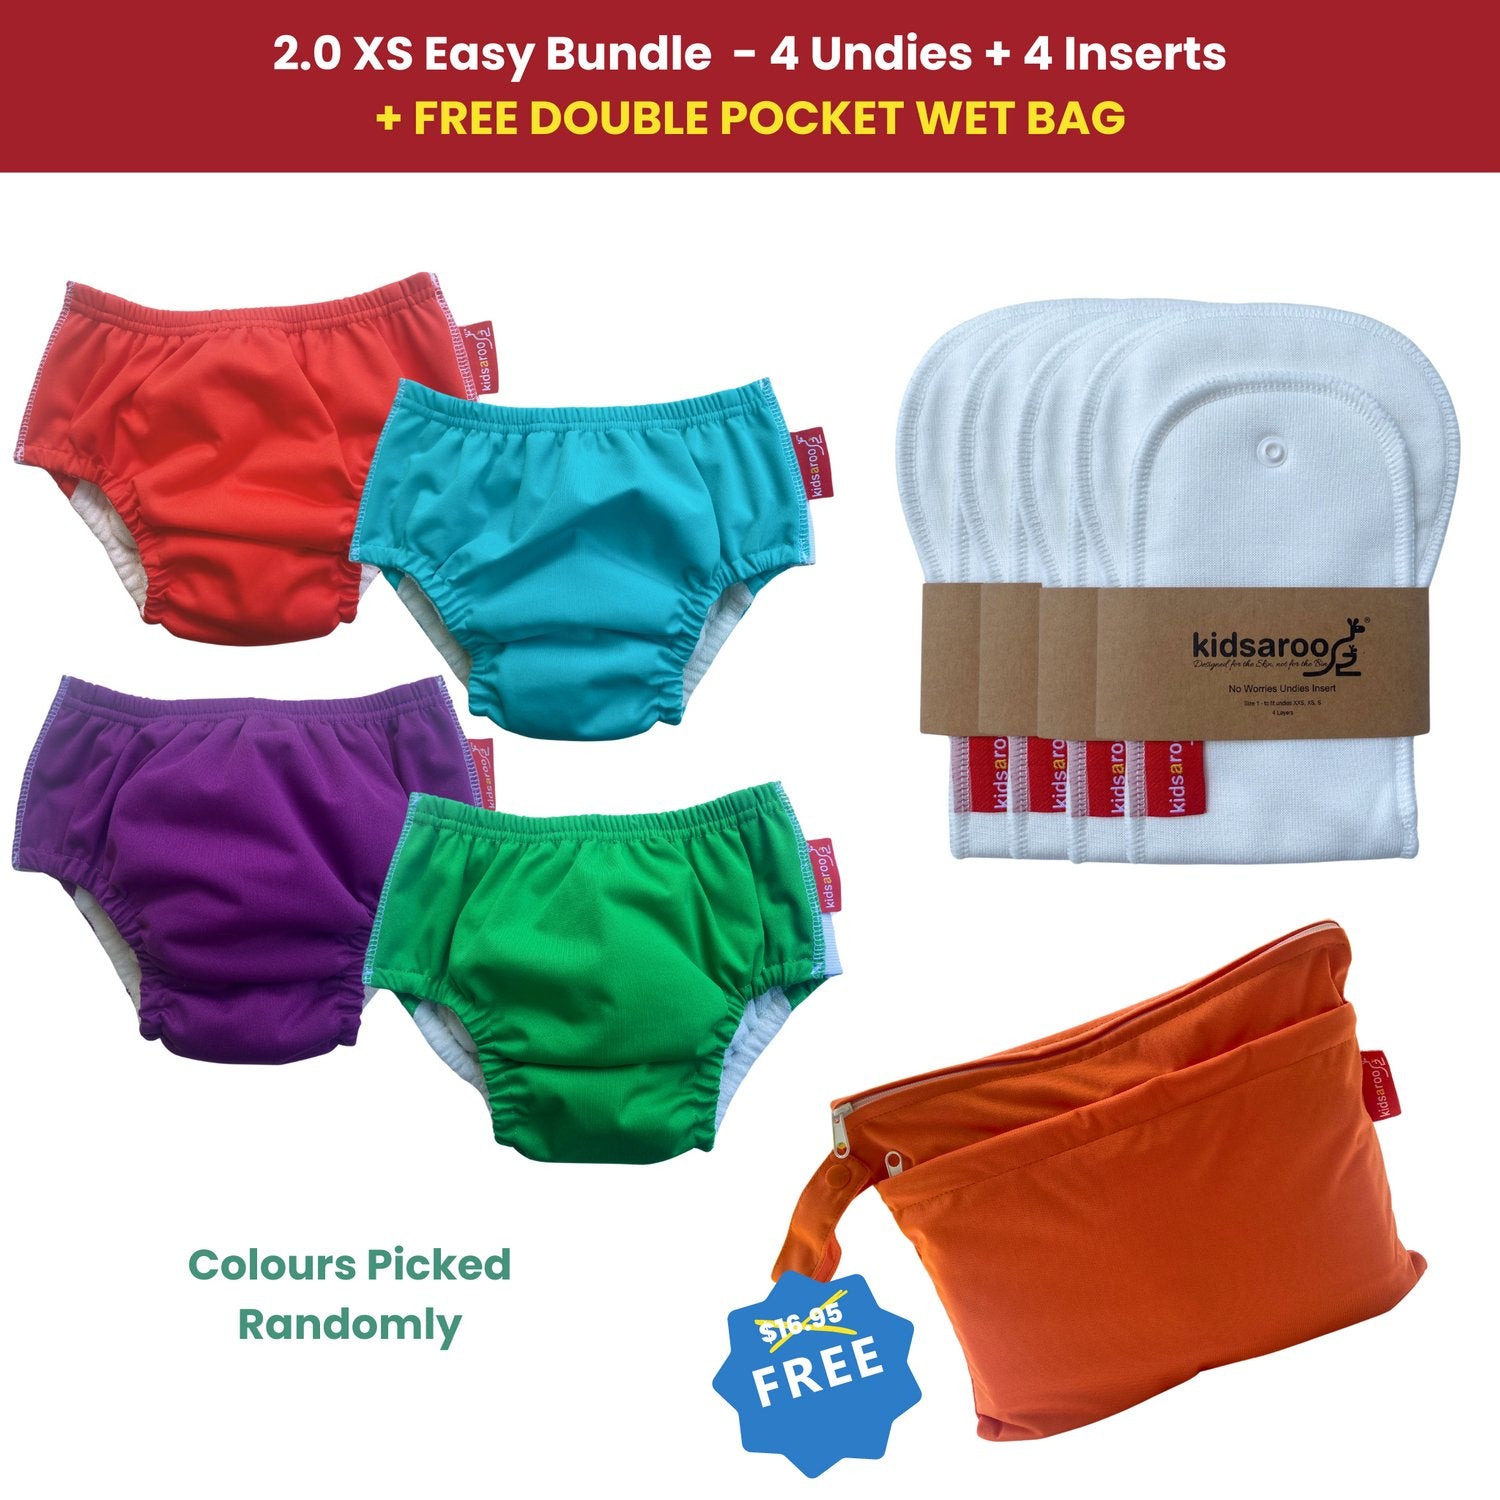 2.0 Easy Bundle - 4 Undies + 4 Inserts - Size XS - Kidsaroo